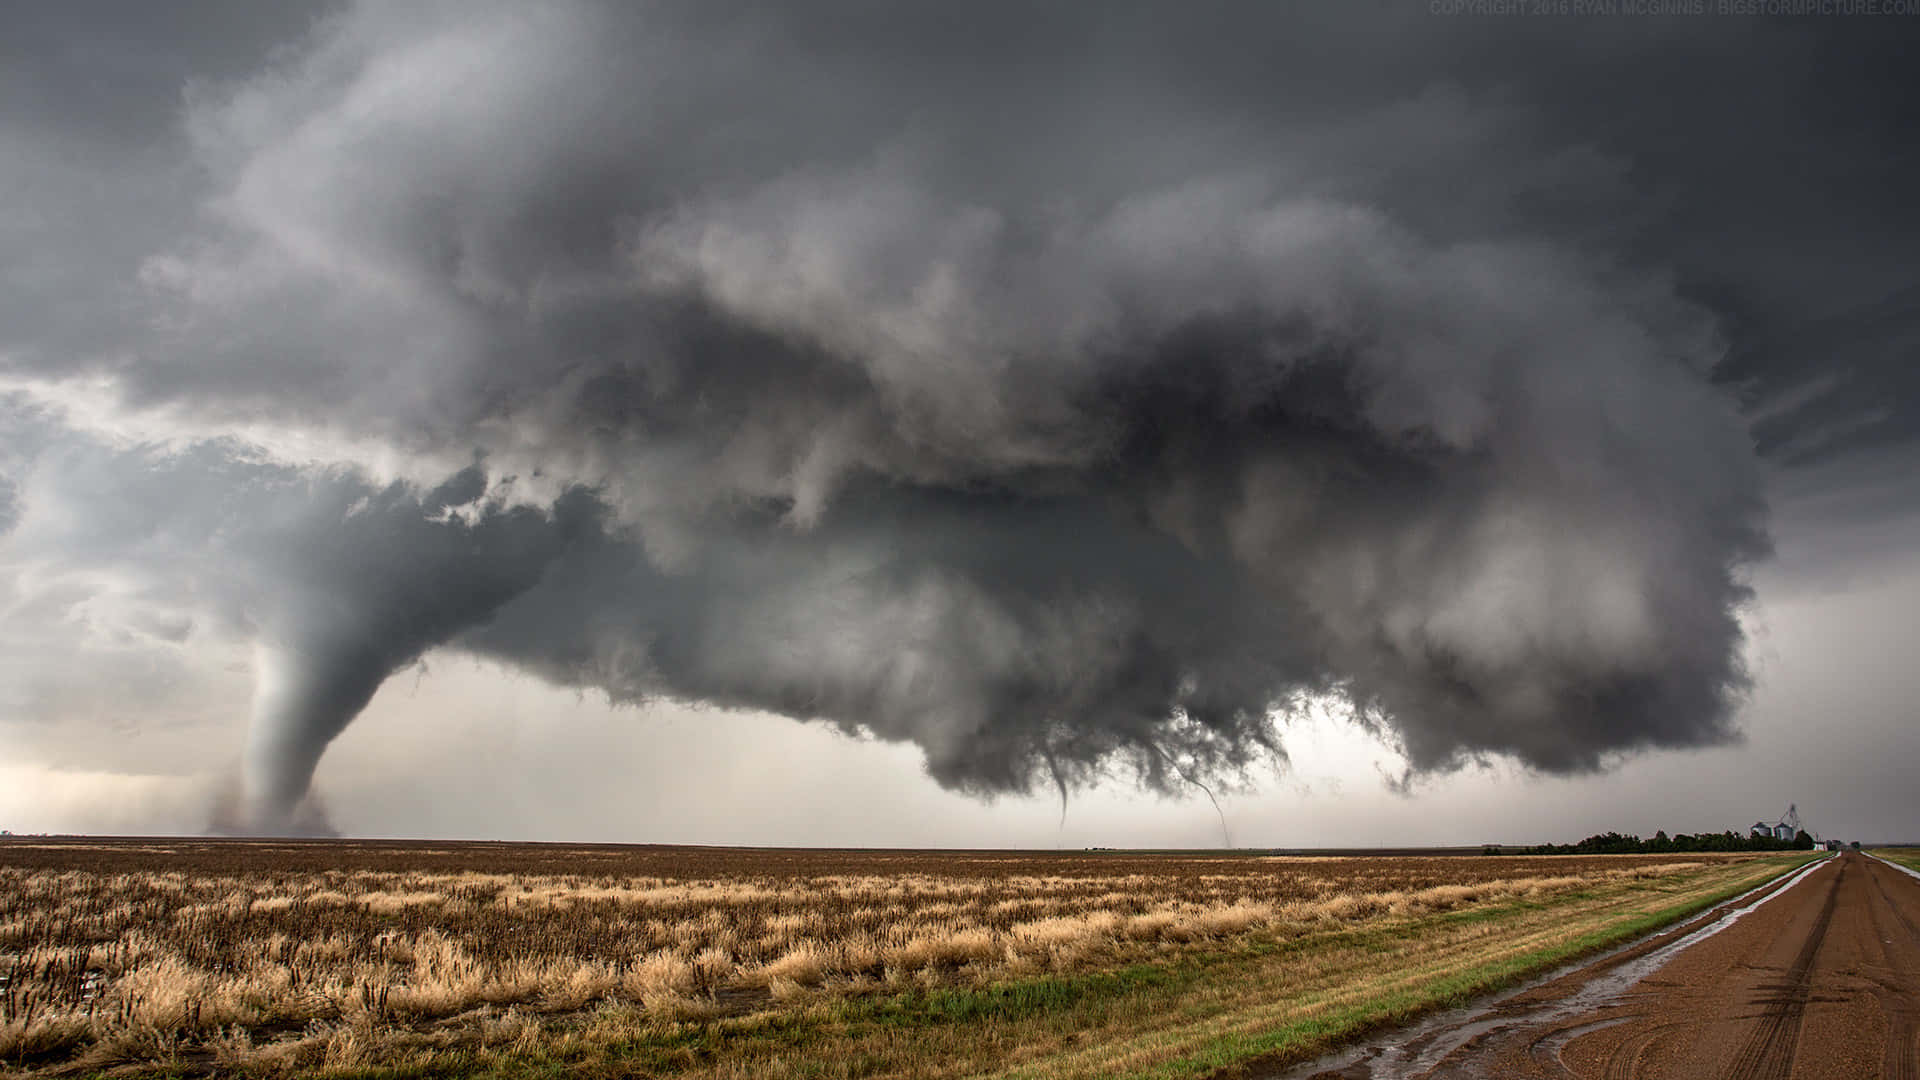 A powerful tornado sweeps across the vast landscape